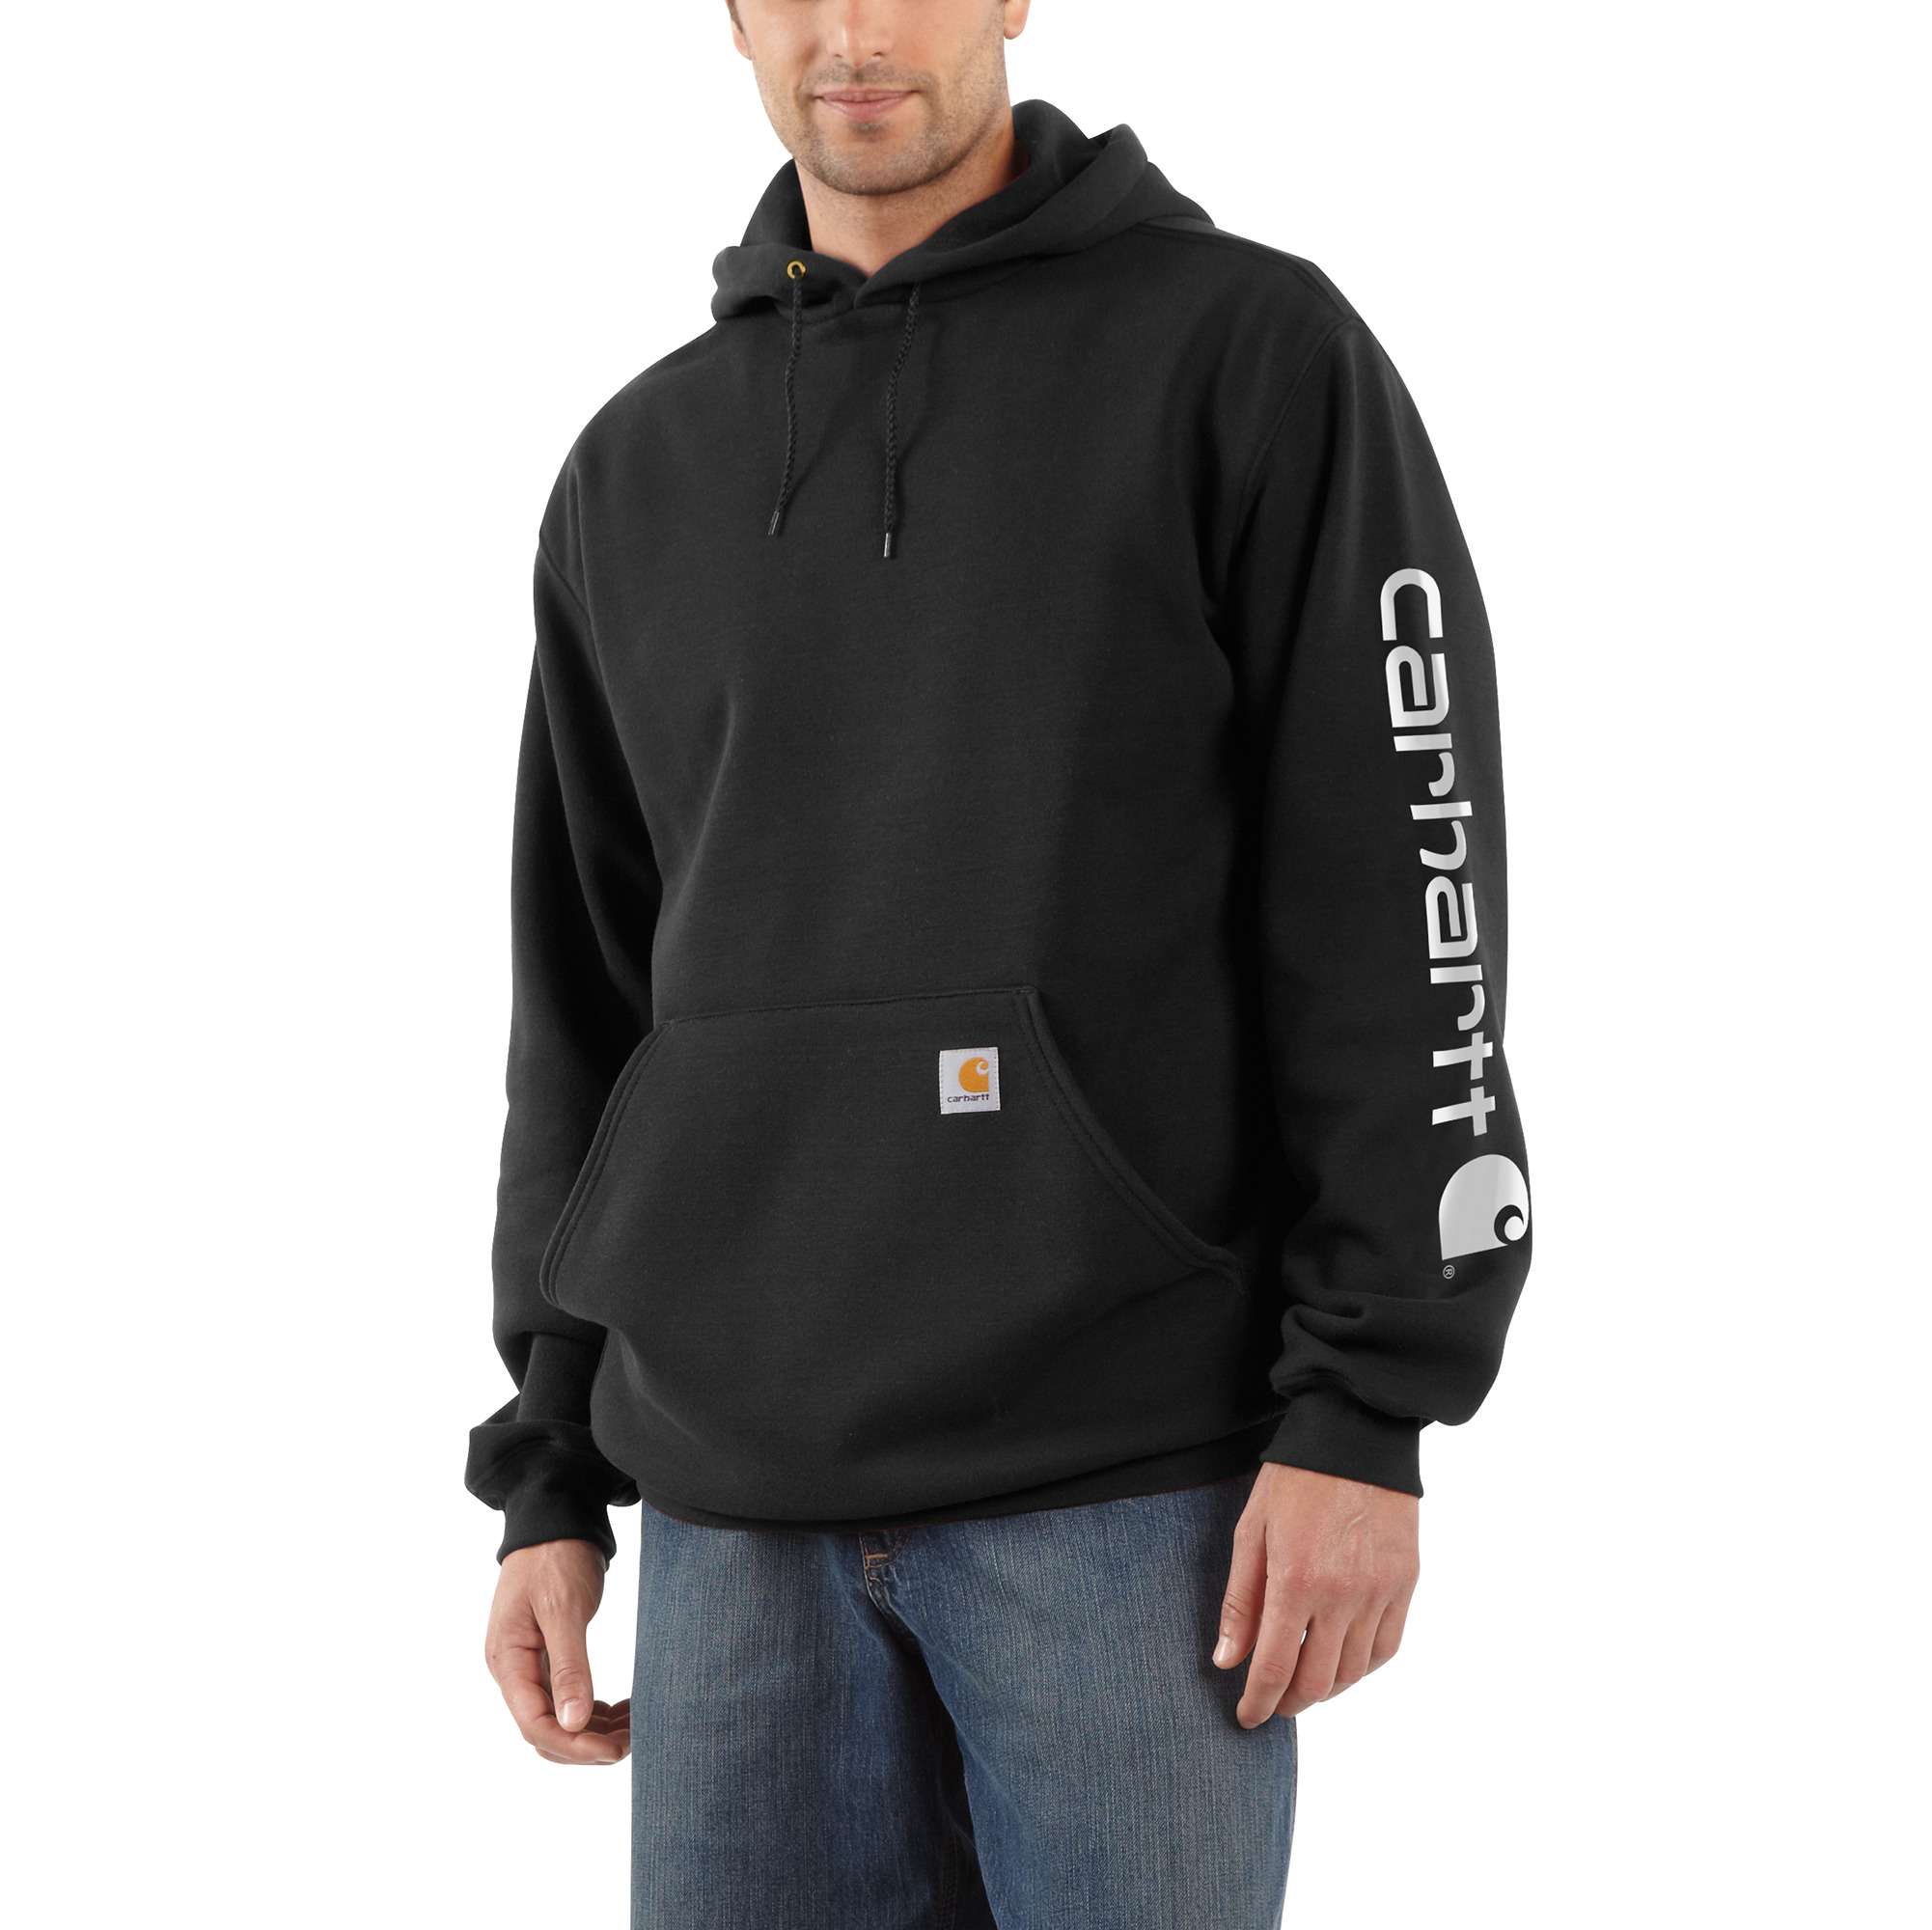 Carhartt Paxton Rain Defender Hoodie Sweatshirt Customized – Western Skies  Design Company